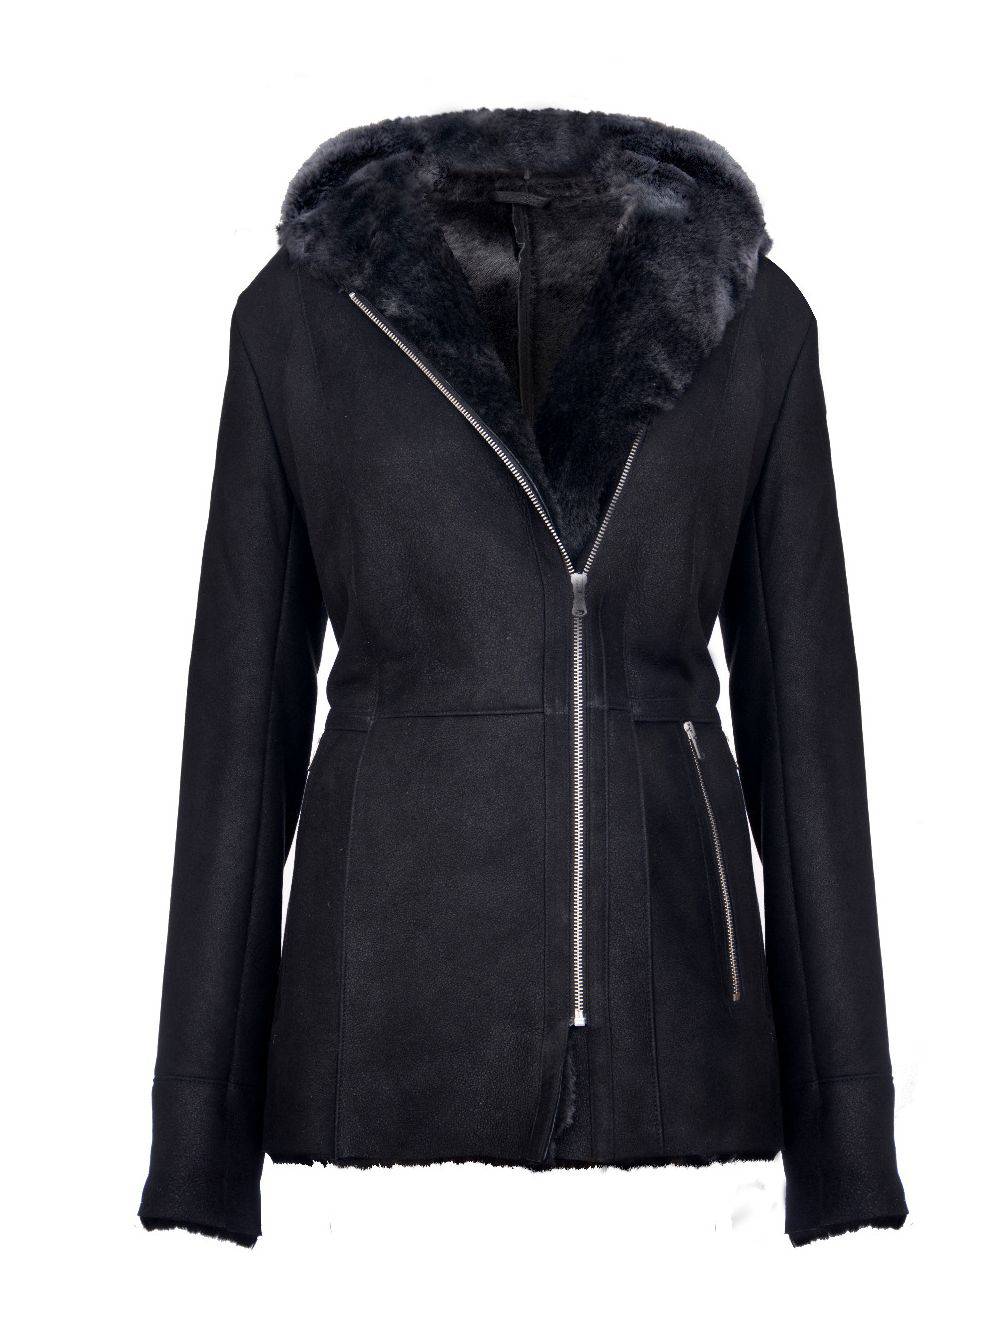 Ladies Black Hooded Merino Sheepskin Jacket for sale - Woodcock and Cavendish